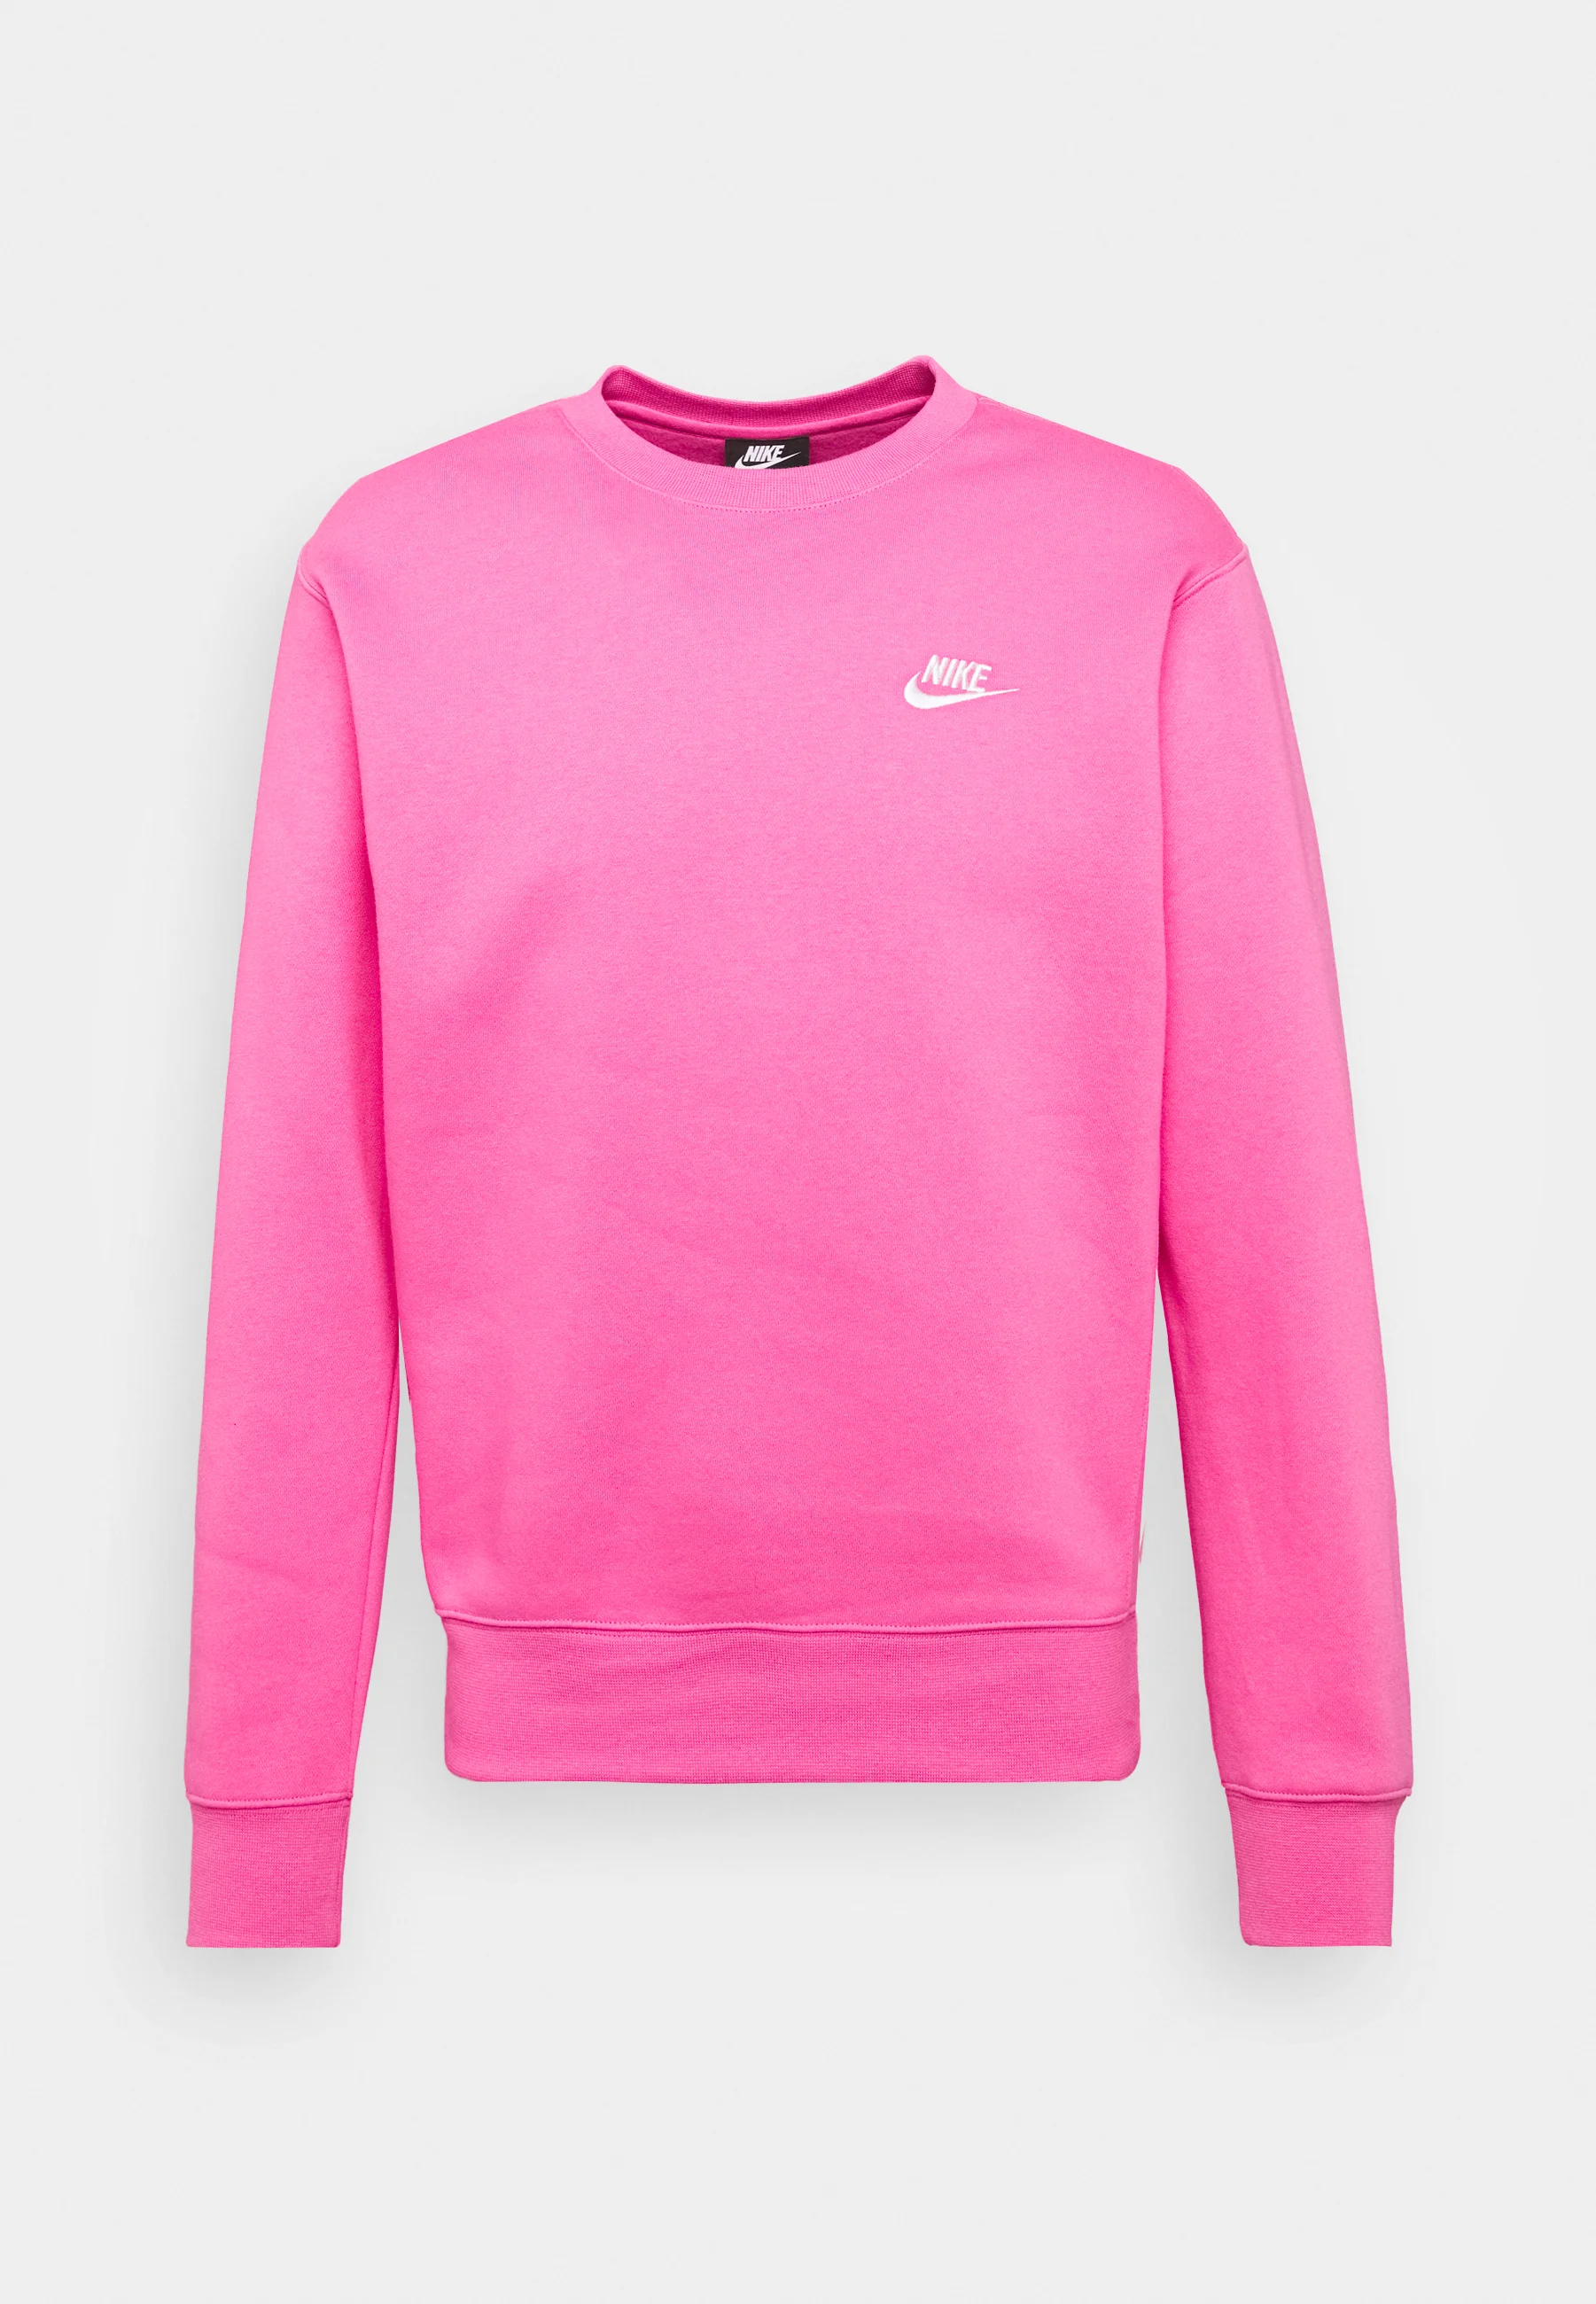 10 Best Pink Nike Sweatshirts for Women Stylish and Comfortable